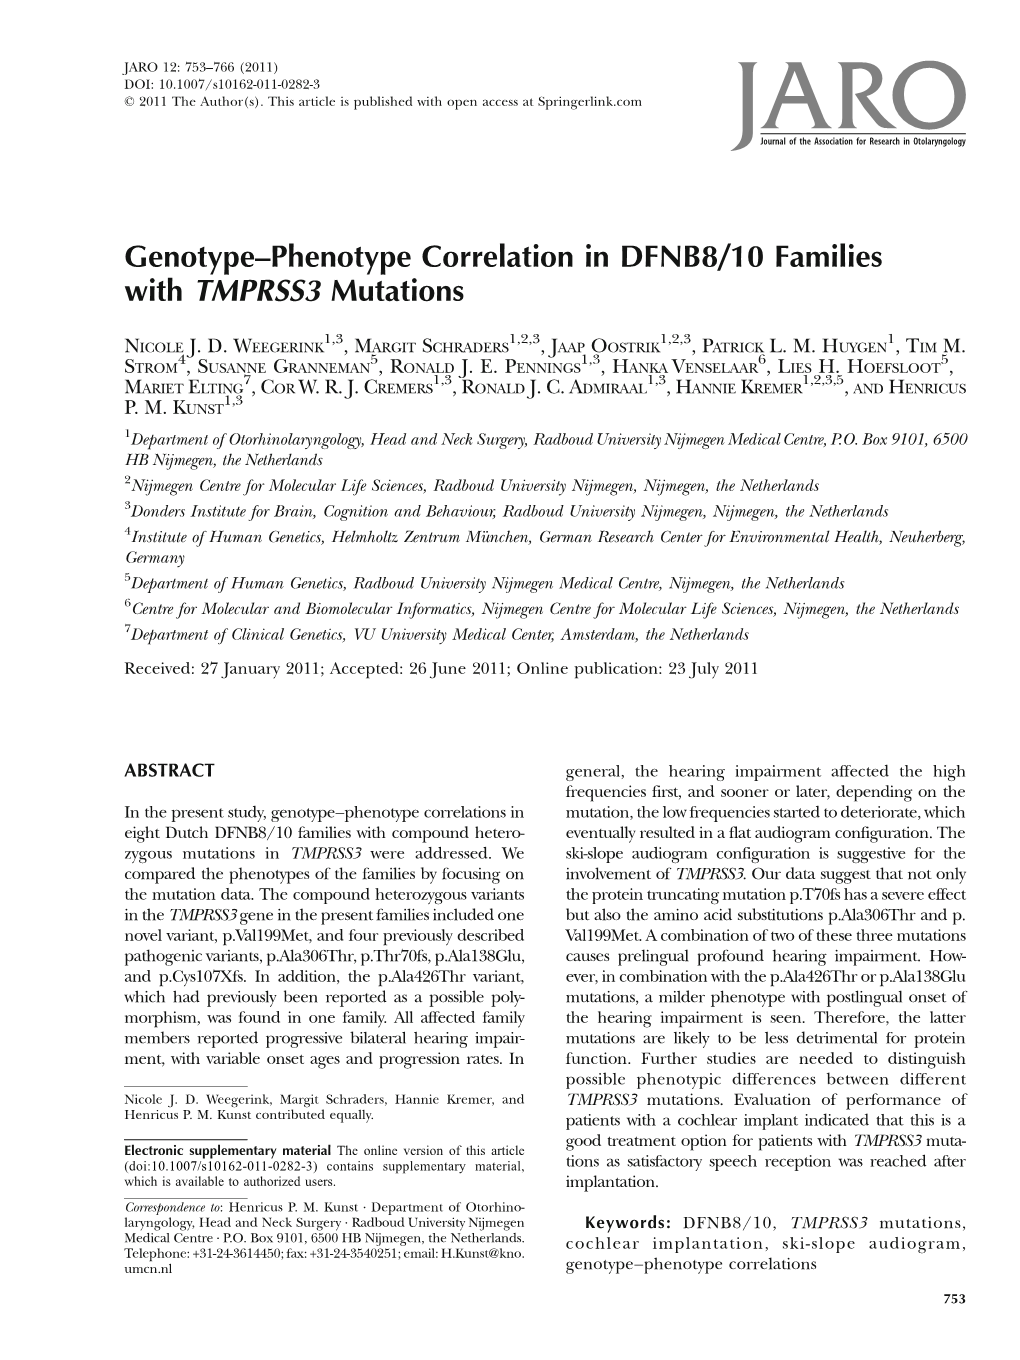 Genotype–Phenotype Correlation in DFNB8/10 Families with TMPRSS3 Mutations